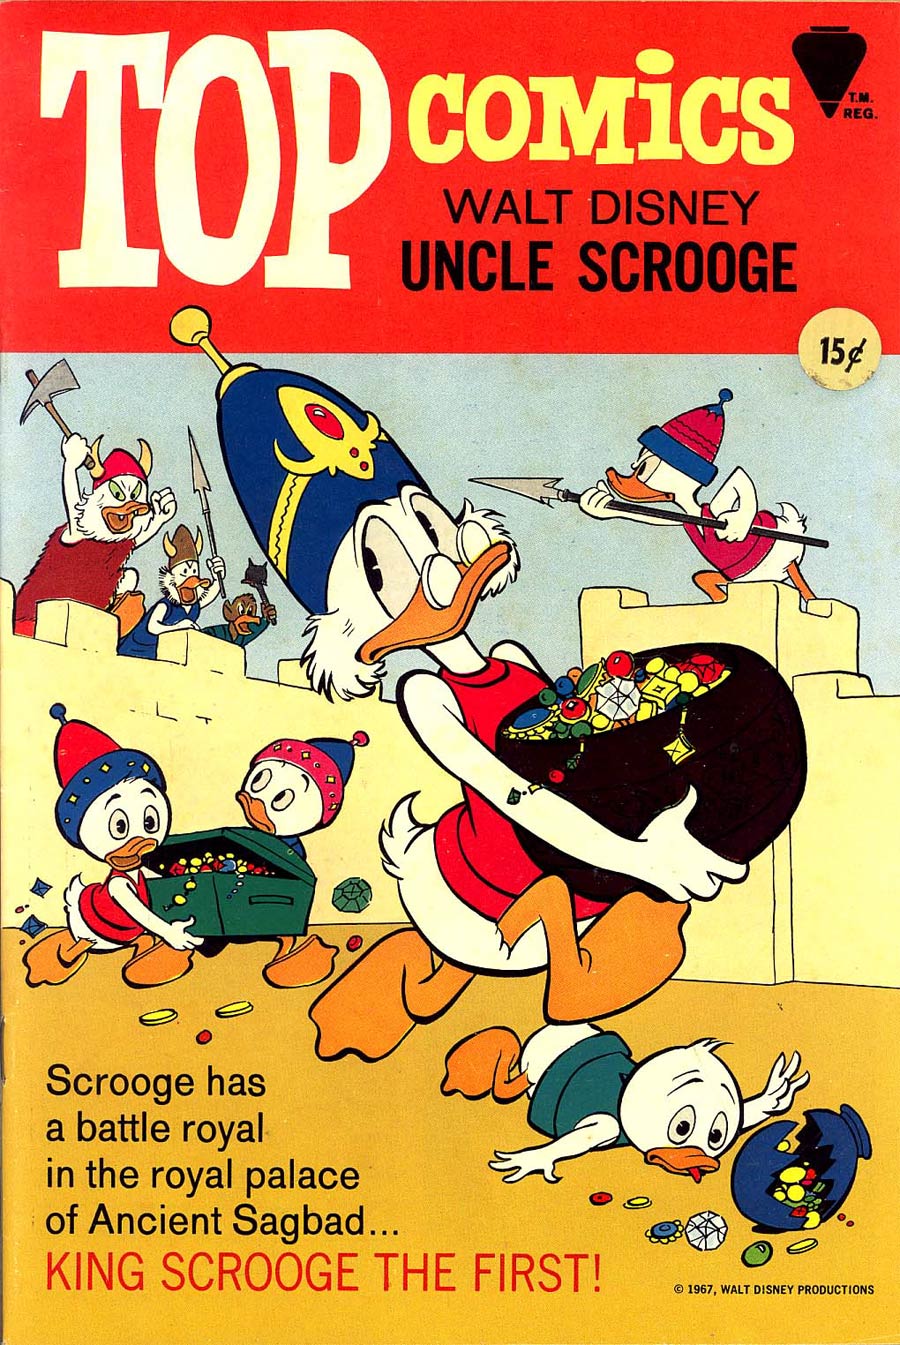 Top Comics #2 Uncle Scrooge